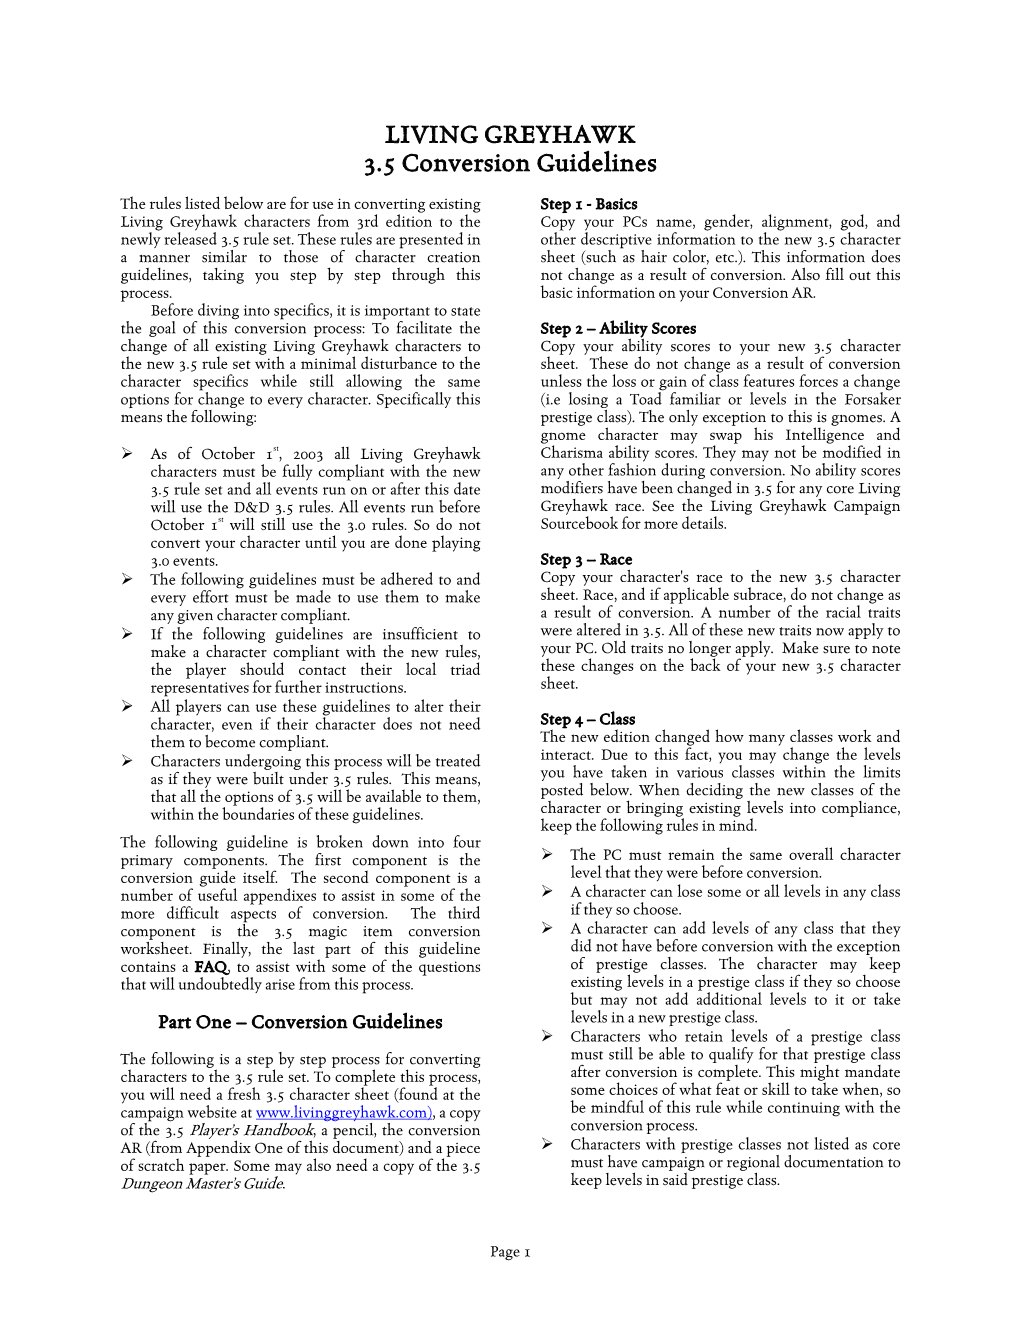 LIVING GREYHAWK 3.5 Conversion Guidelines